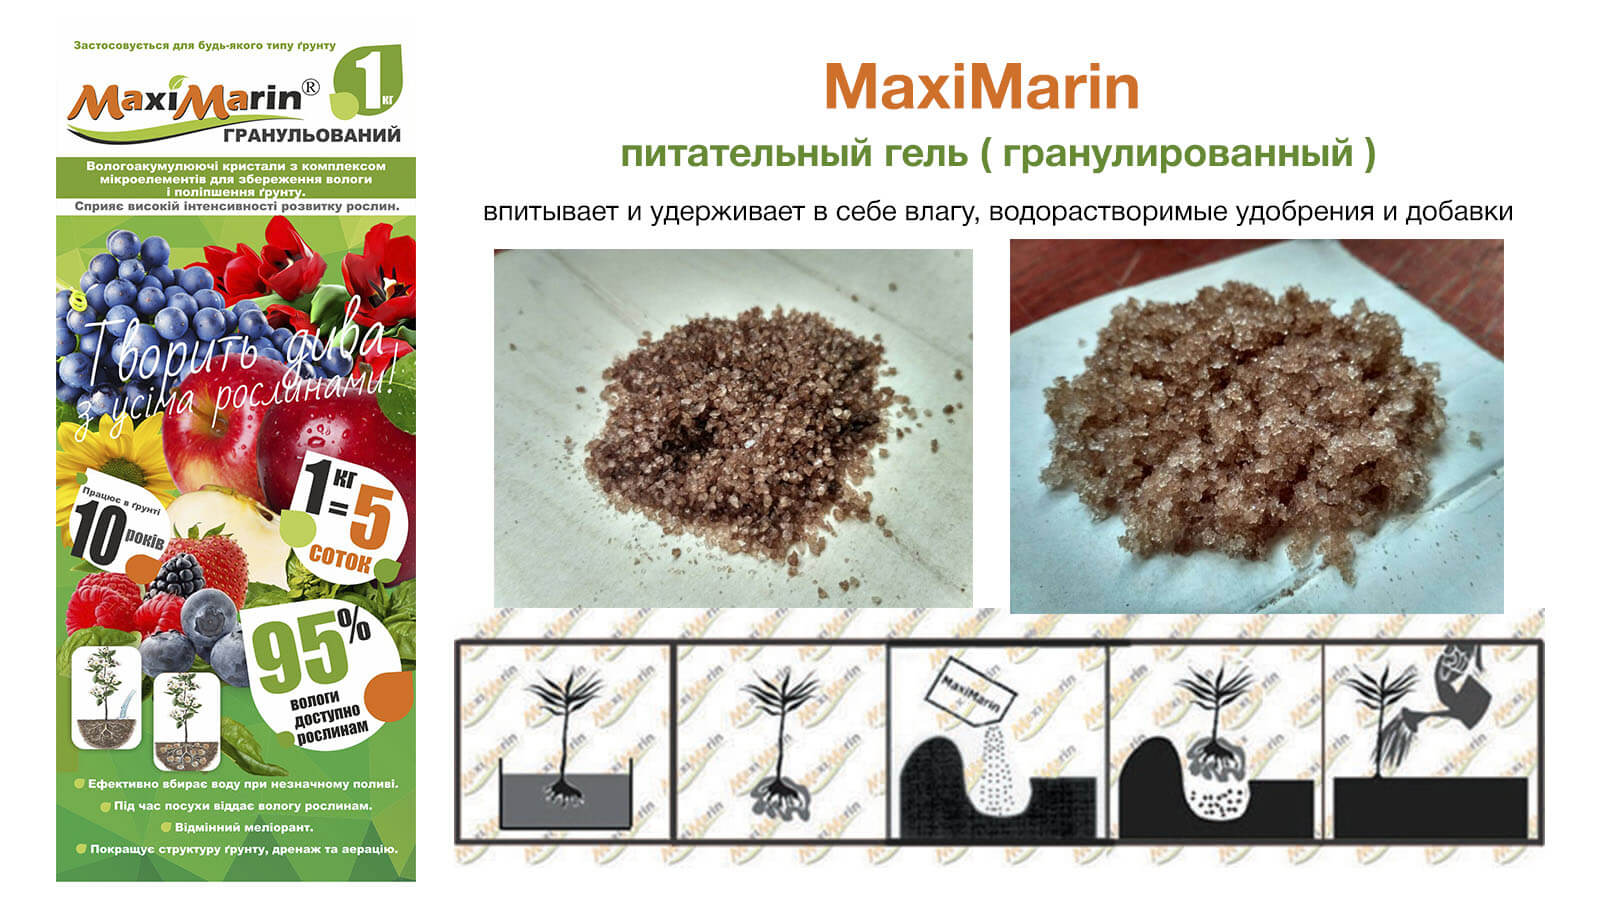 MaxiMarin granuly rus